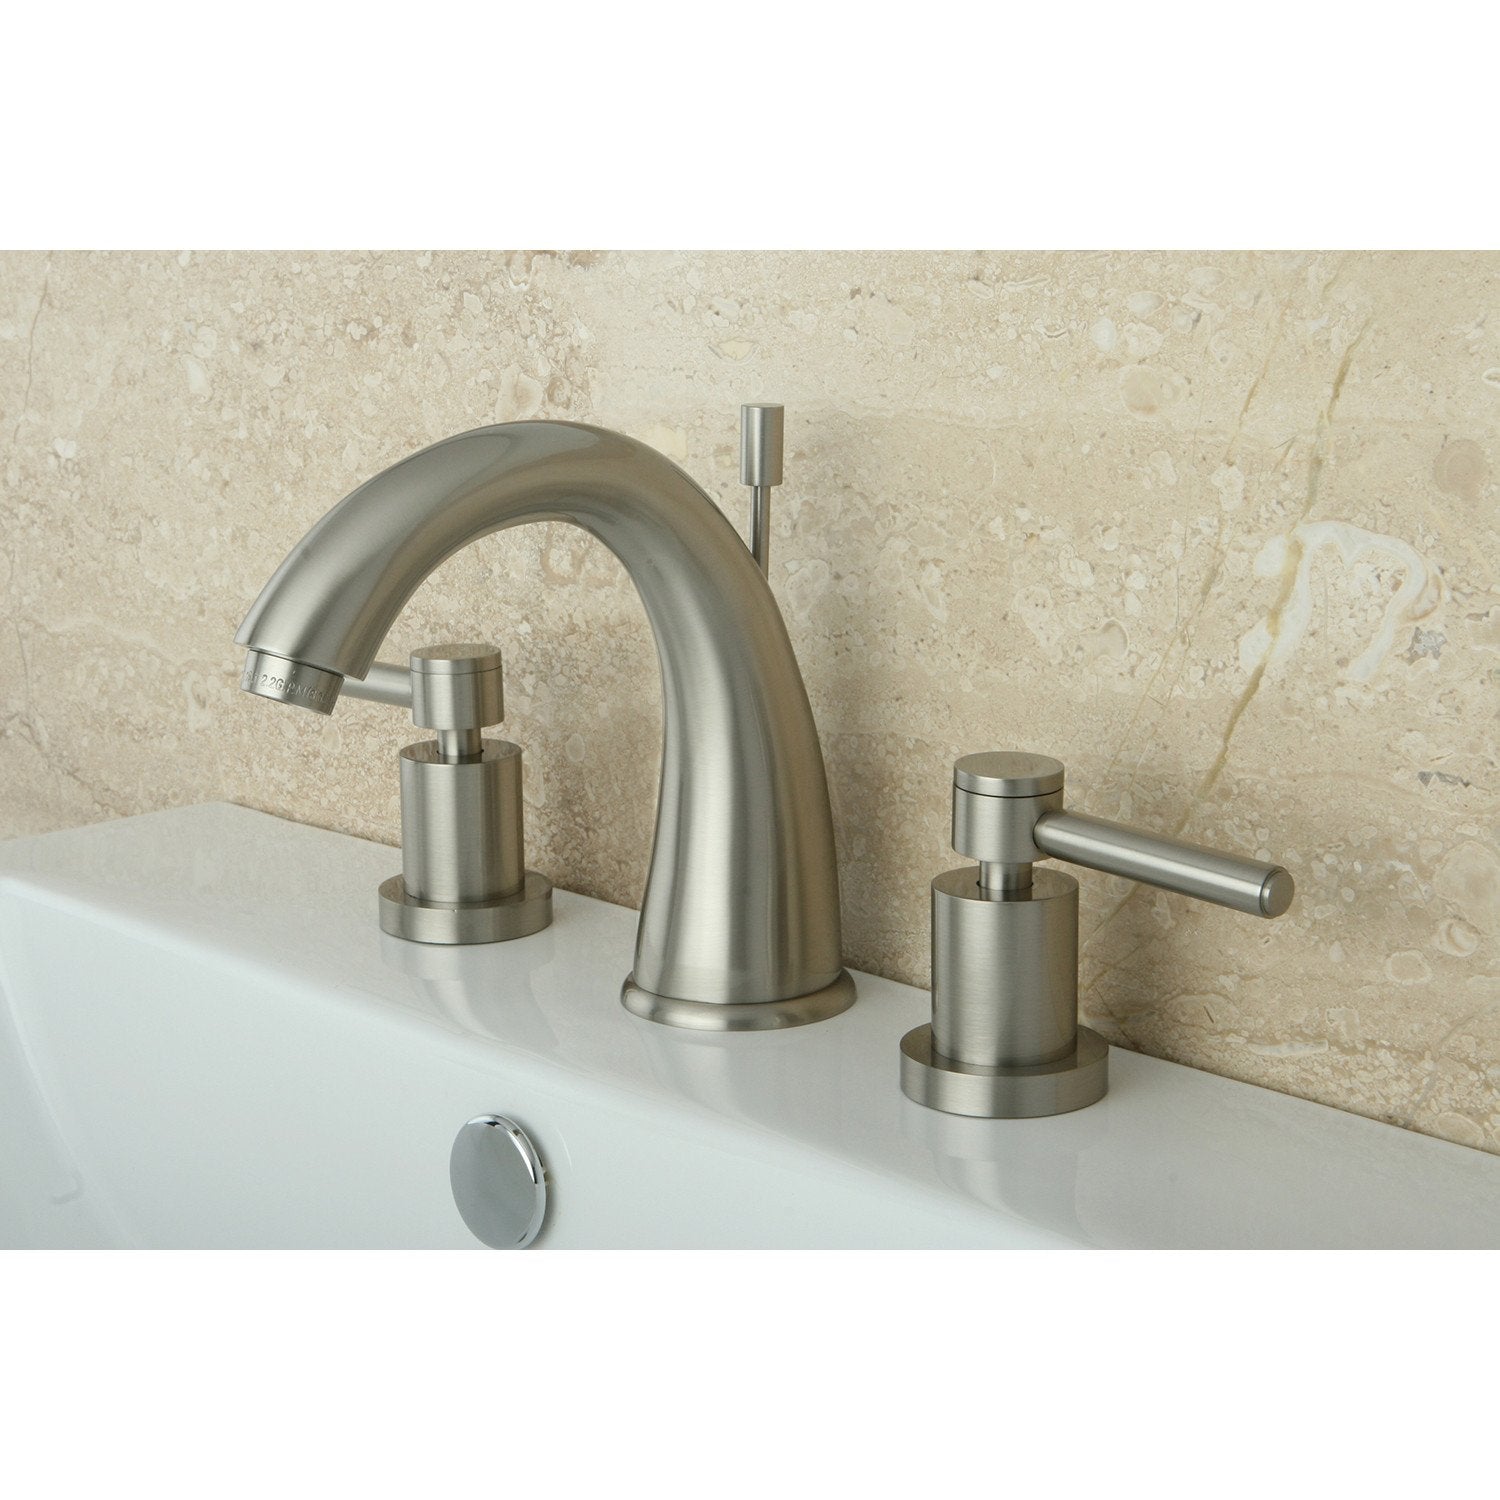 Satin Nickel Two Handle Widespread Bathroom Faucet w/ Brass Pop-Up KS2968DL